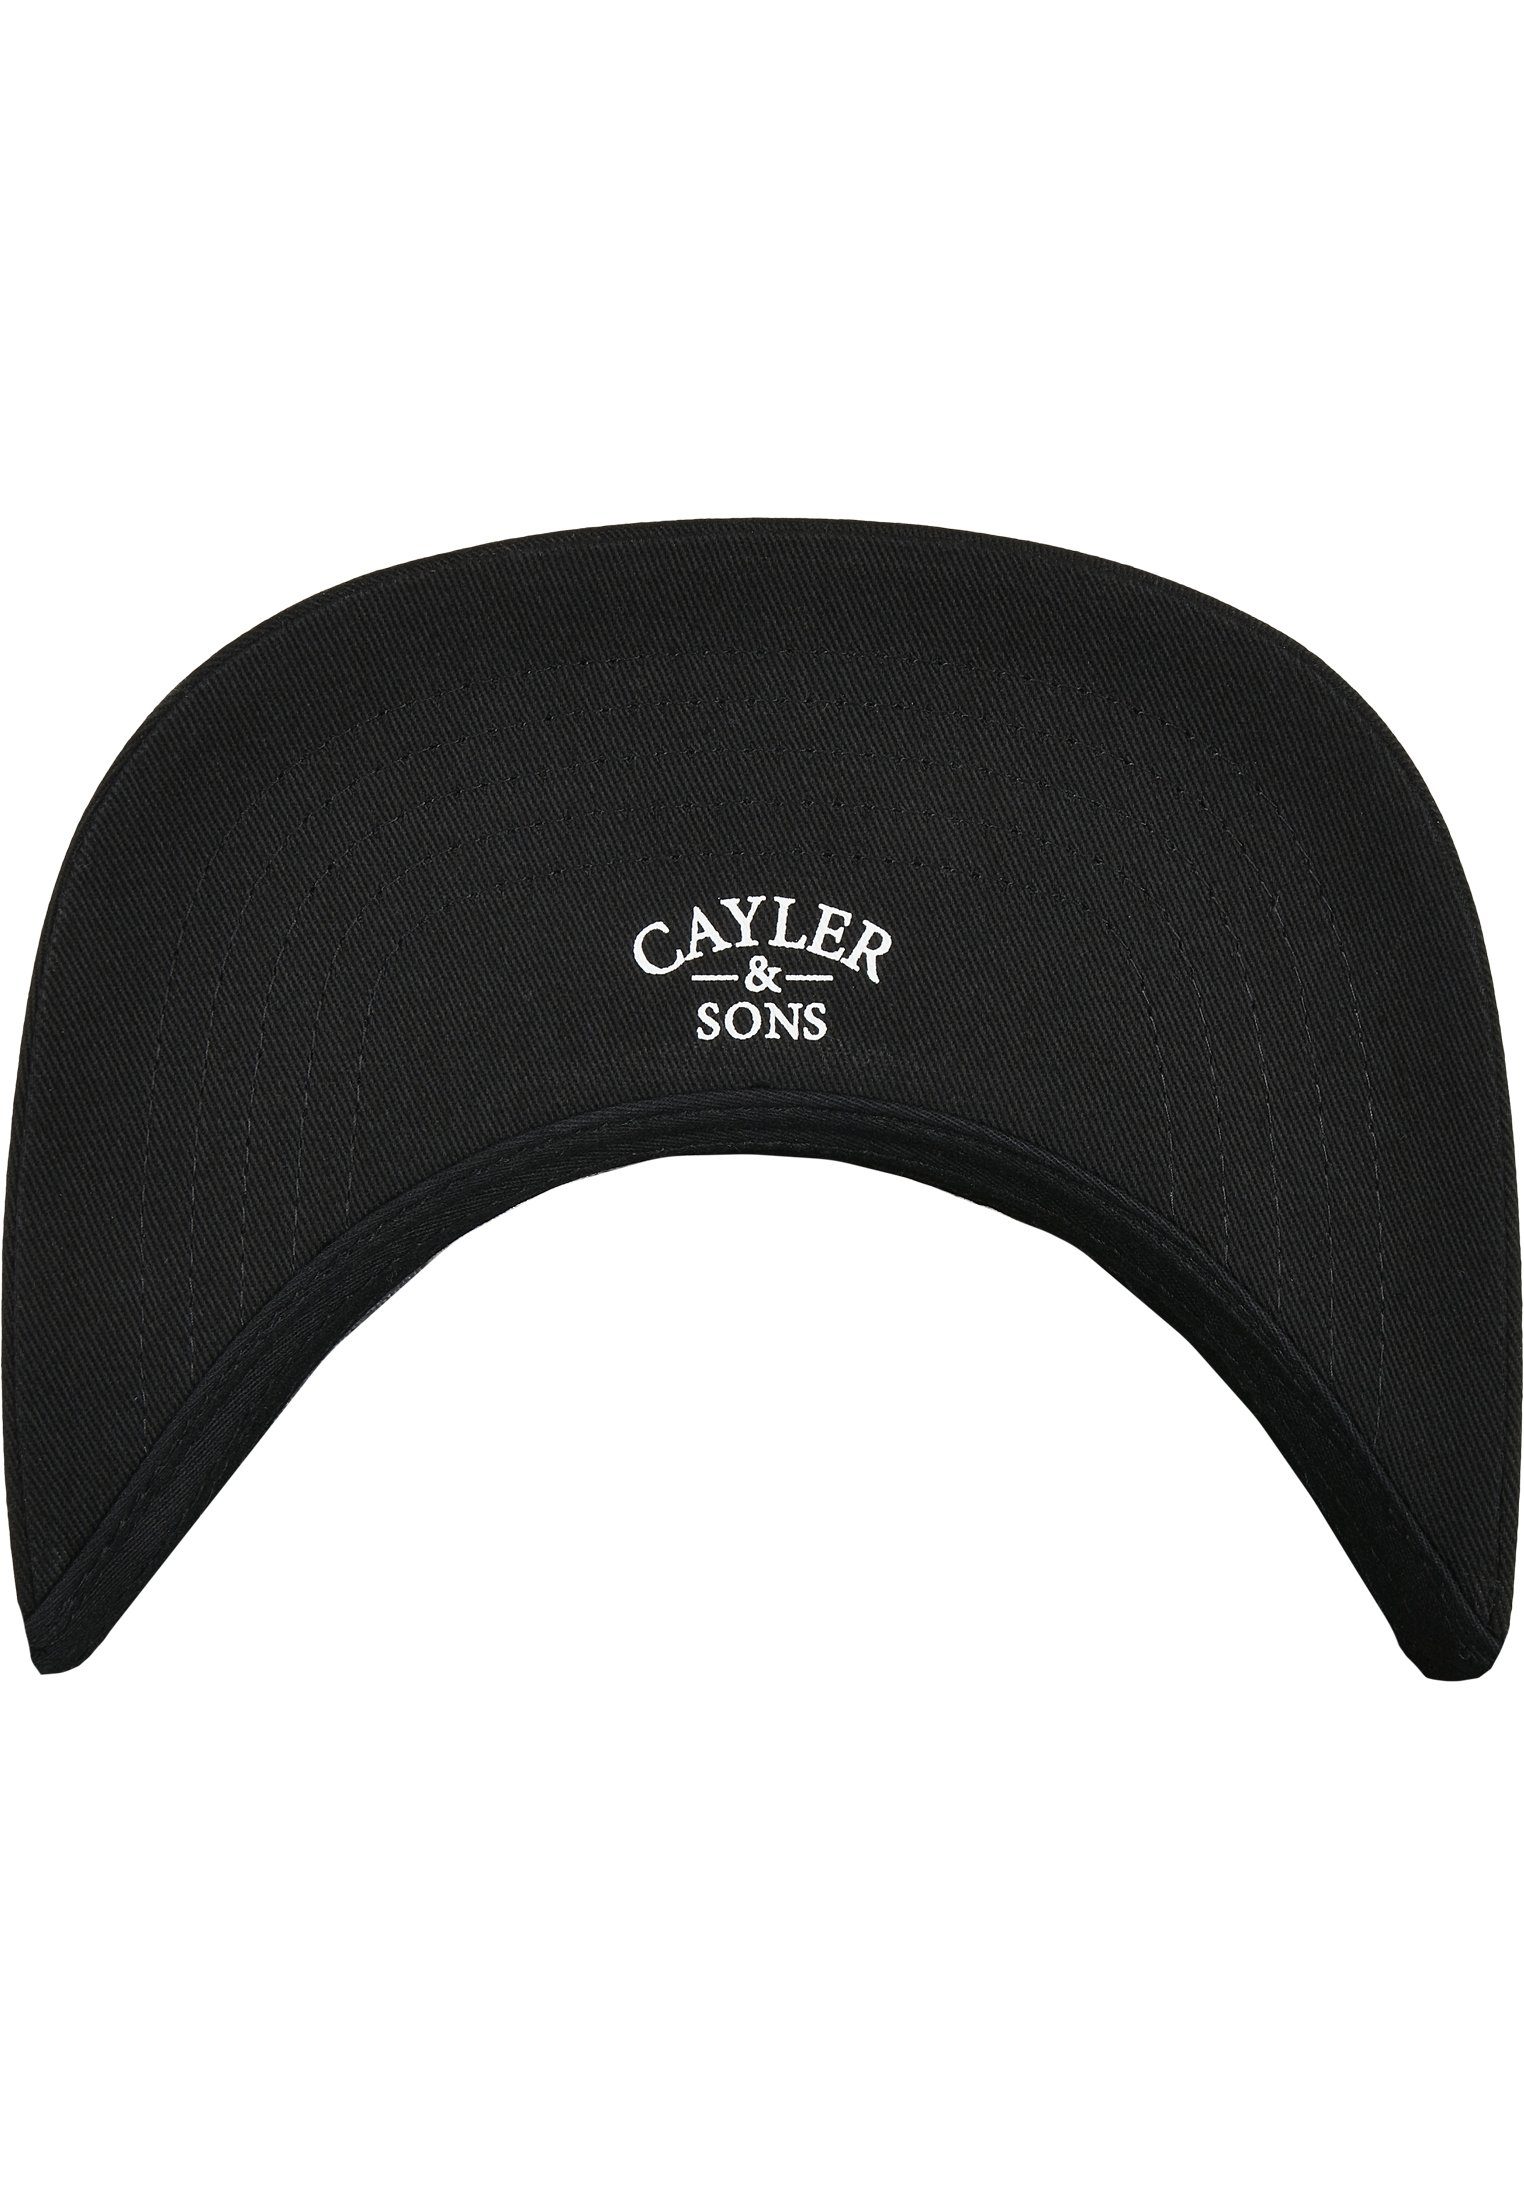 CAYLER & SONS Dark Cap Trucker WL Cap Flex C&S Flashin